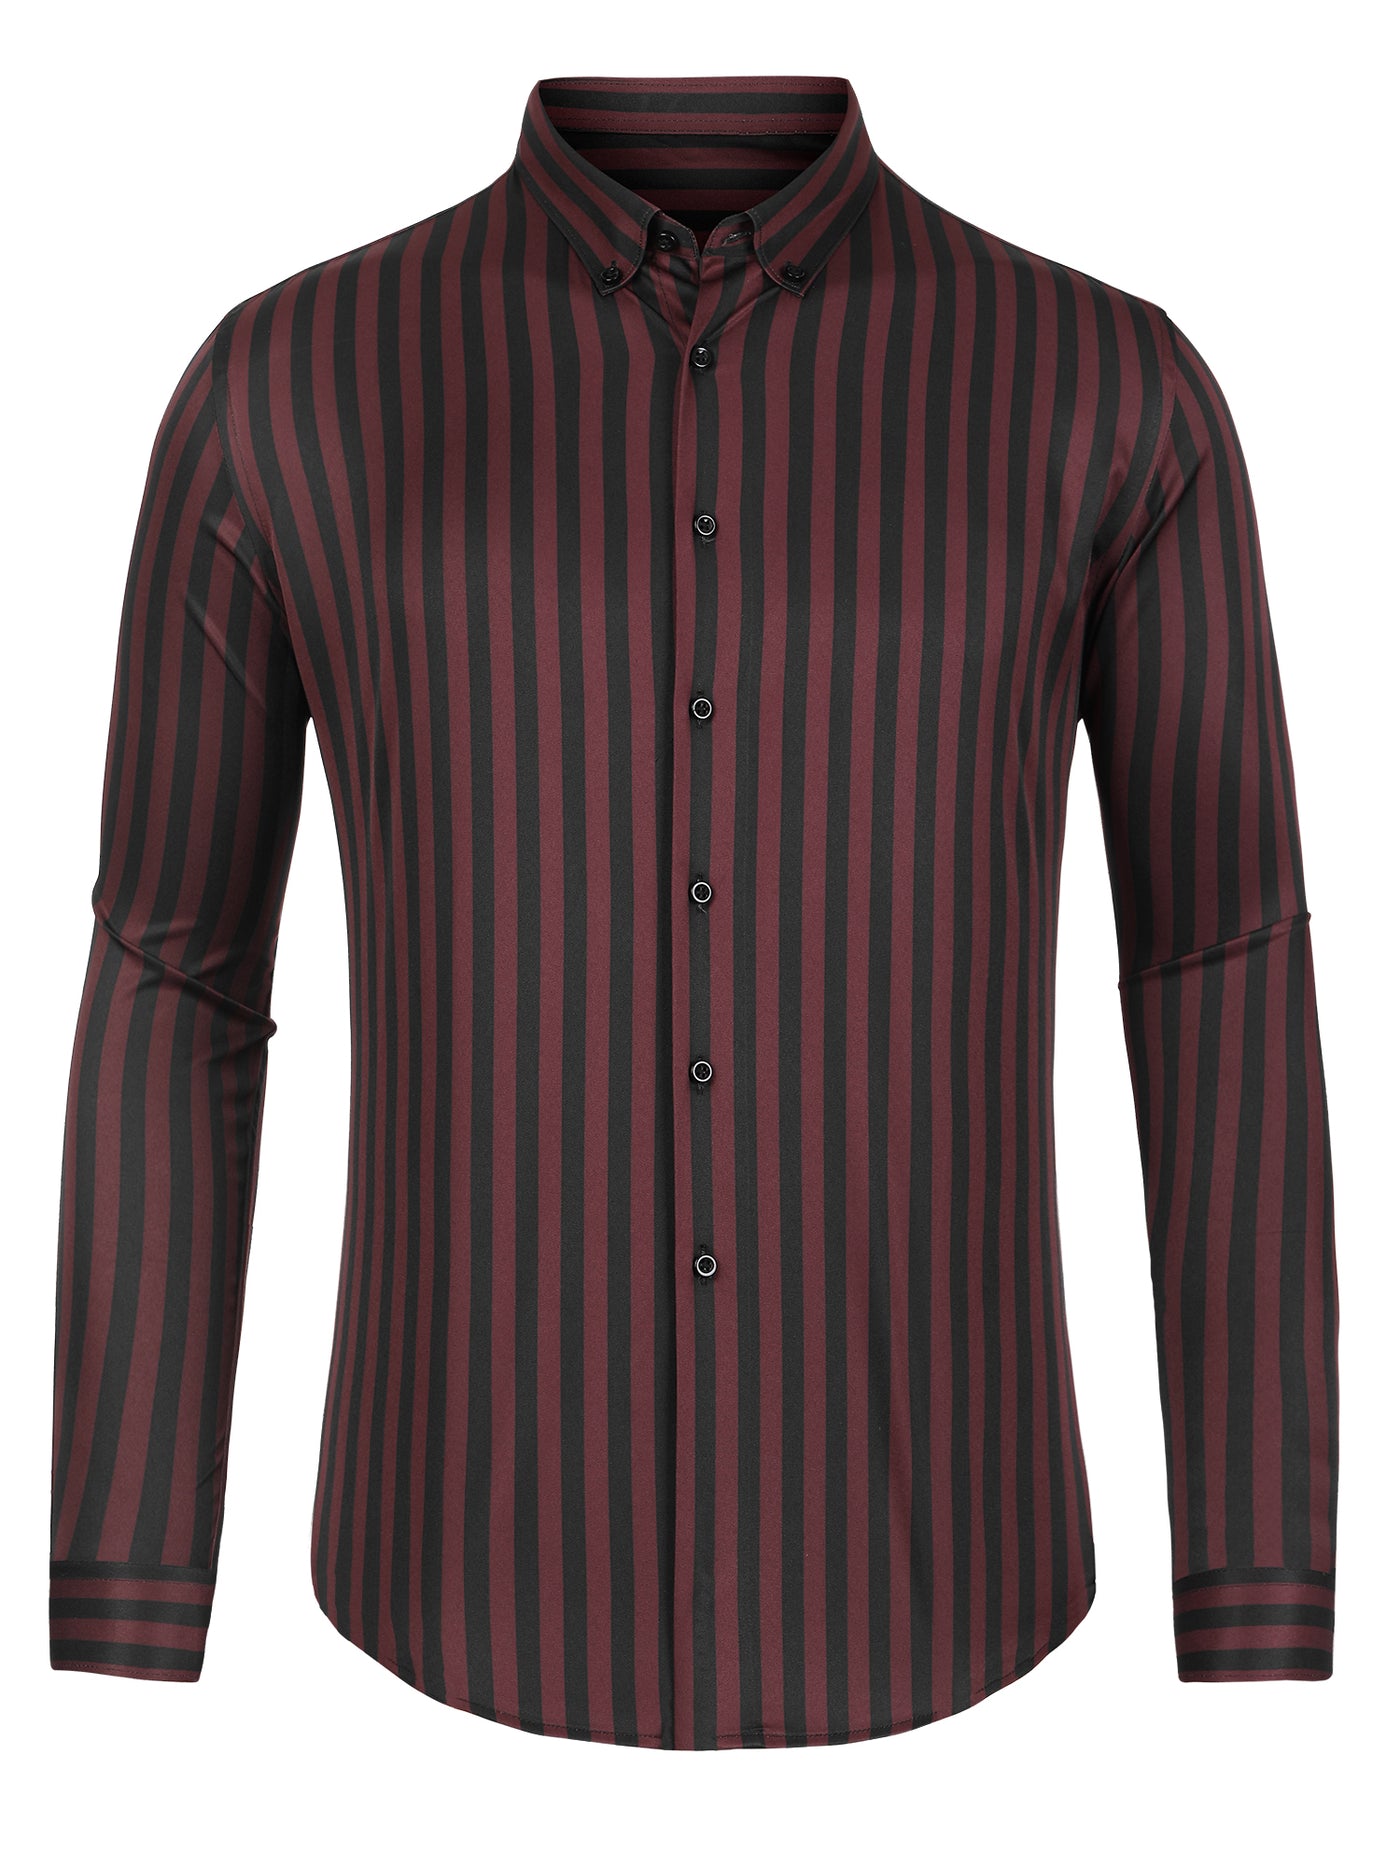 Bublédon Men's Satin Stripe Dress Shirts Long Sleeves Button Down Formal Business Shirt